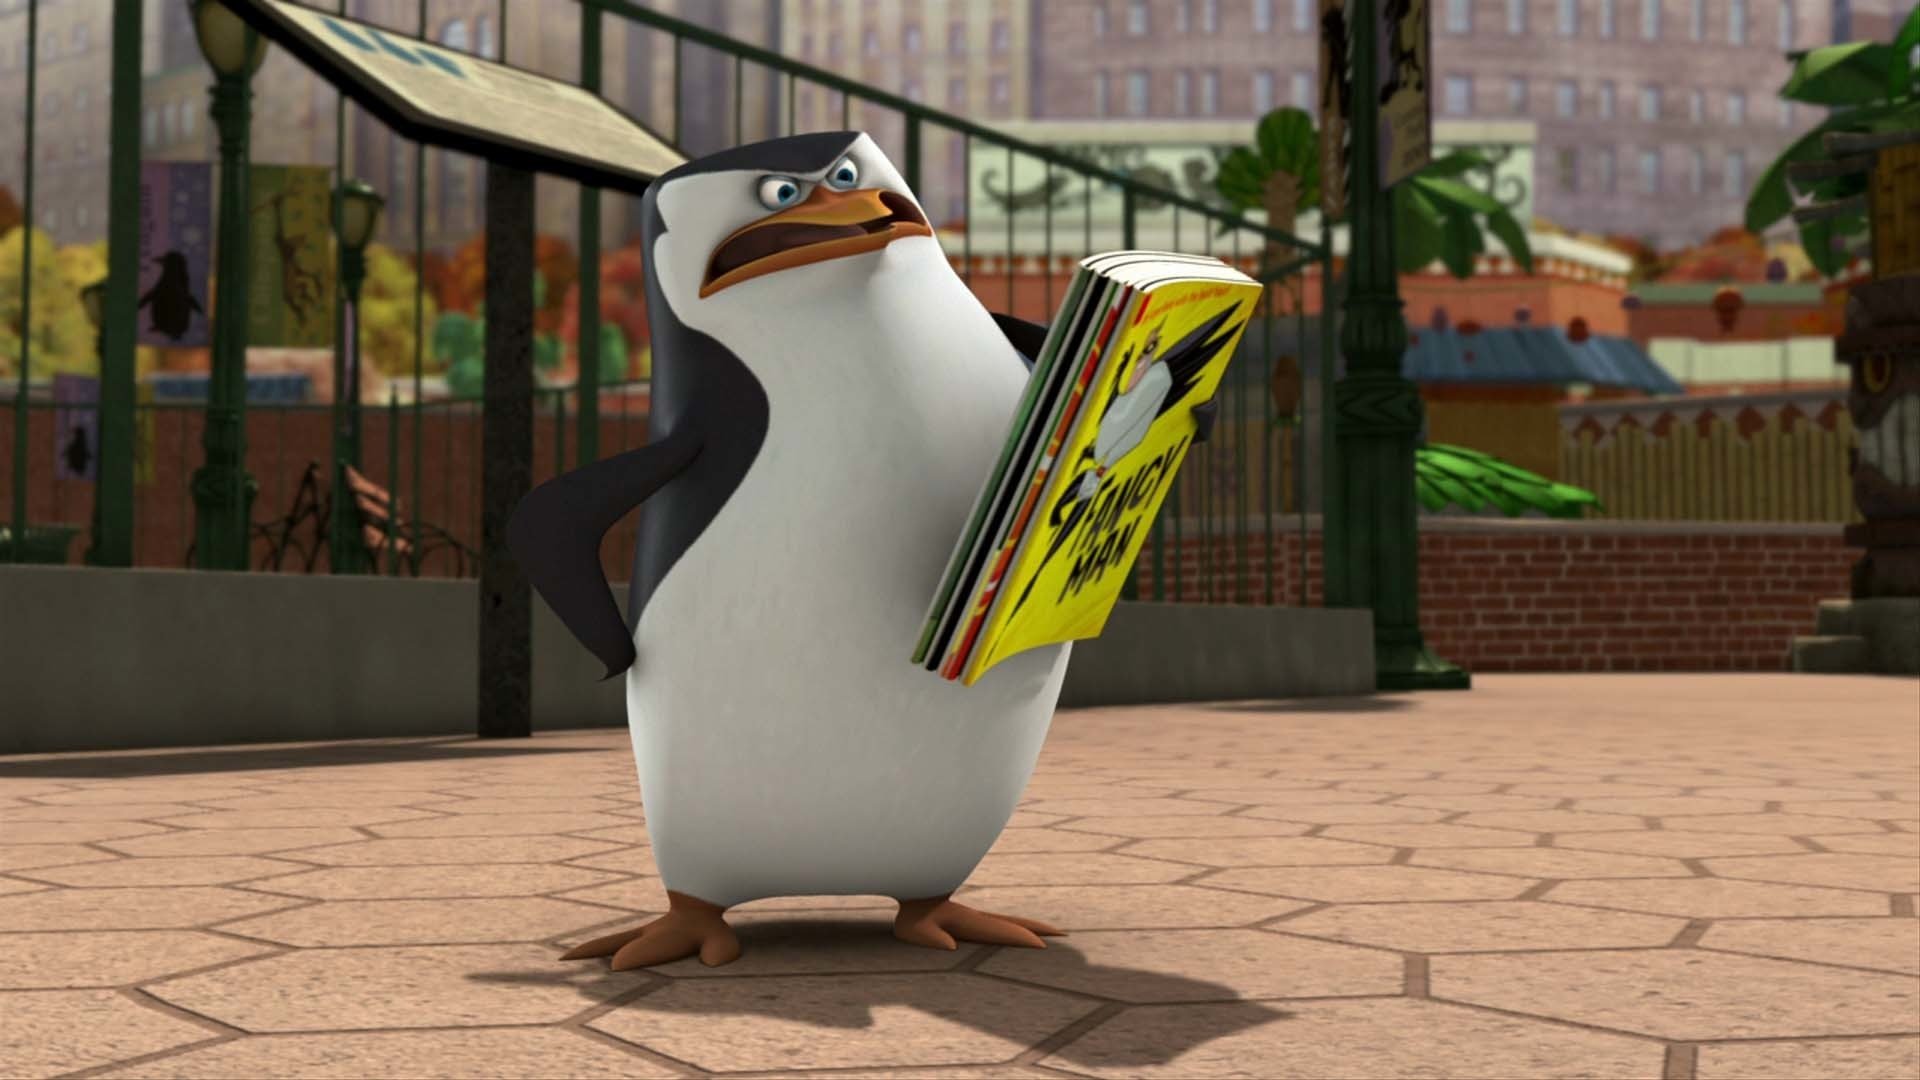 penguins of madagascar download season 2